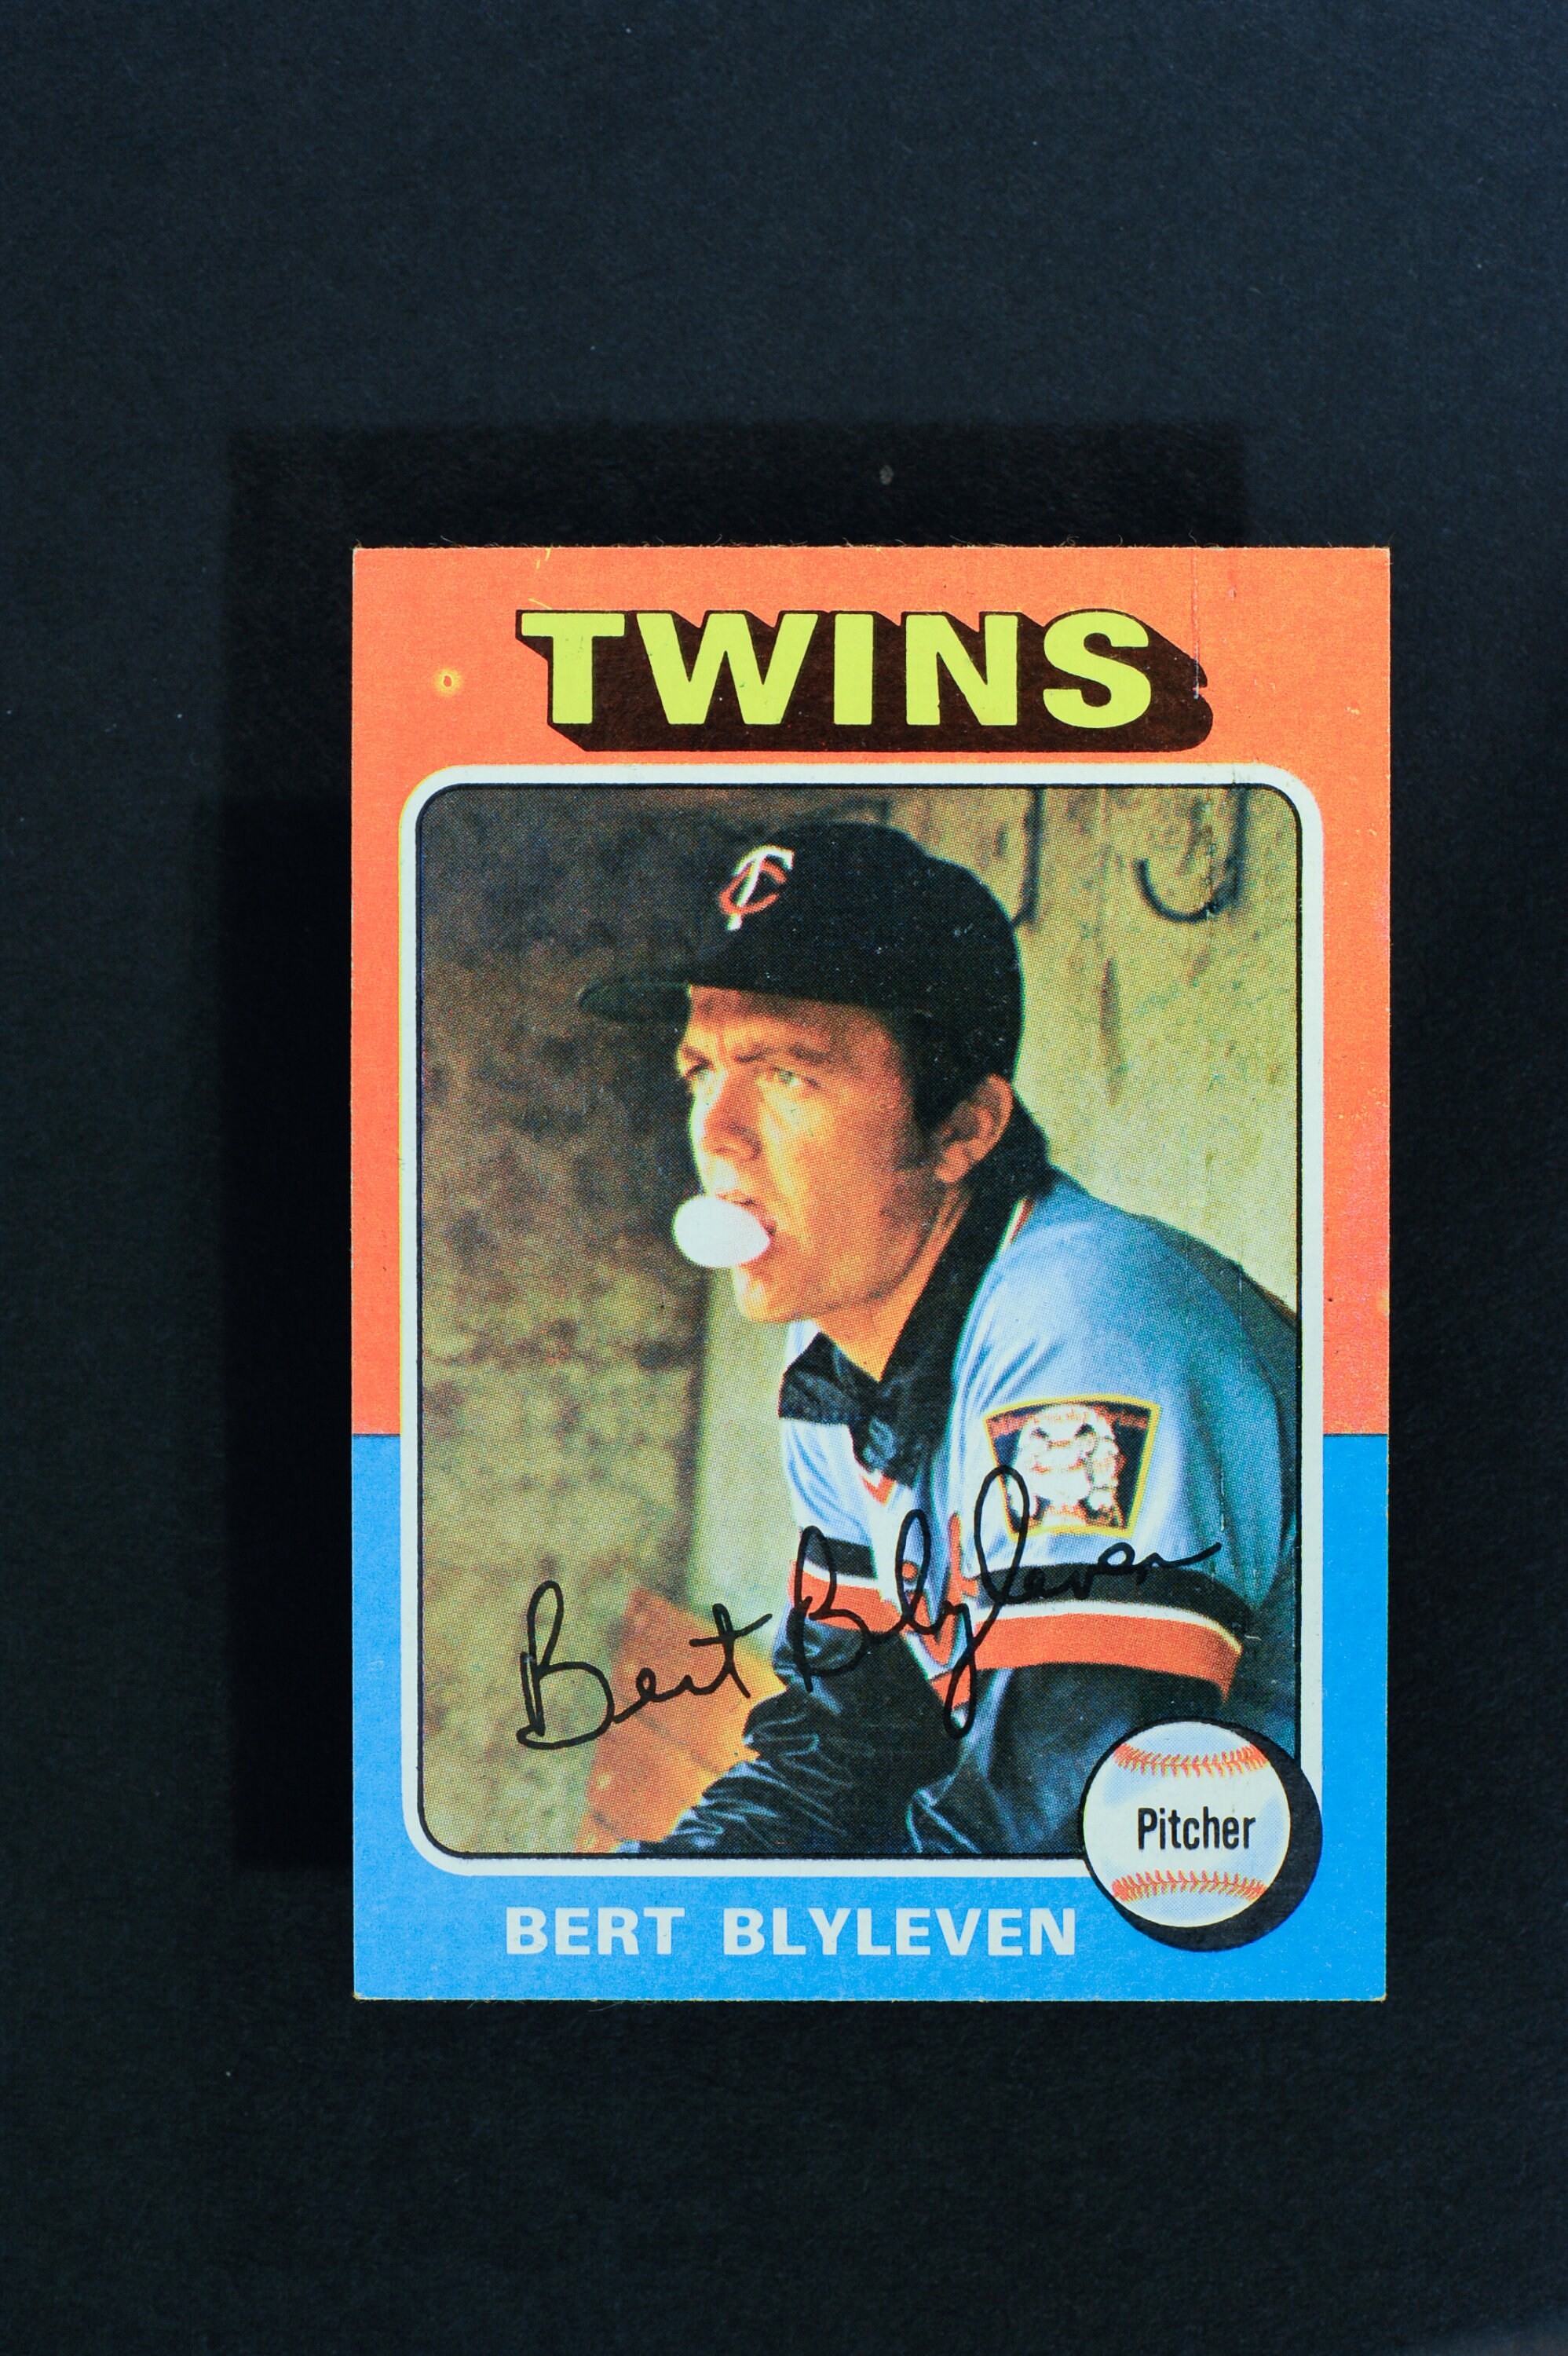 Bert Blyleven Signed Minnesota Twins Jersey (JSA COA) HOF Pitcher